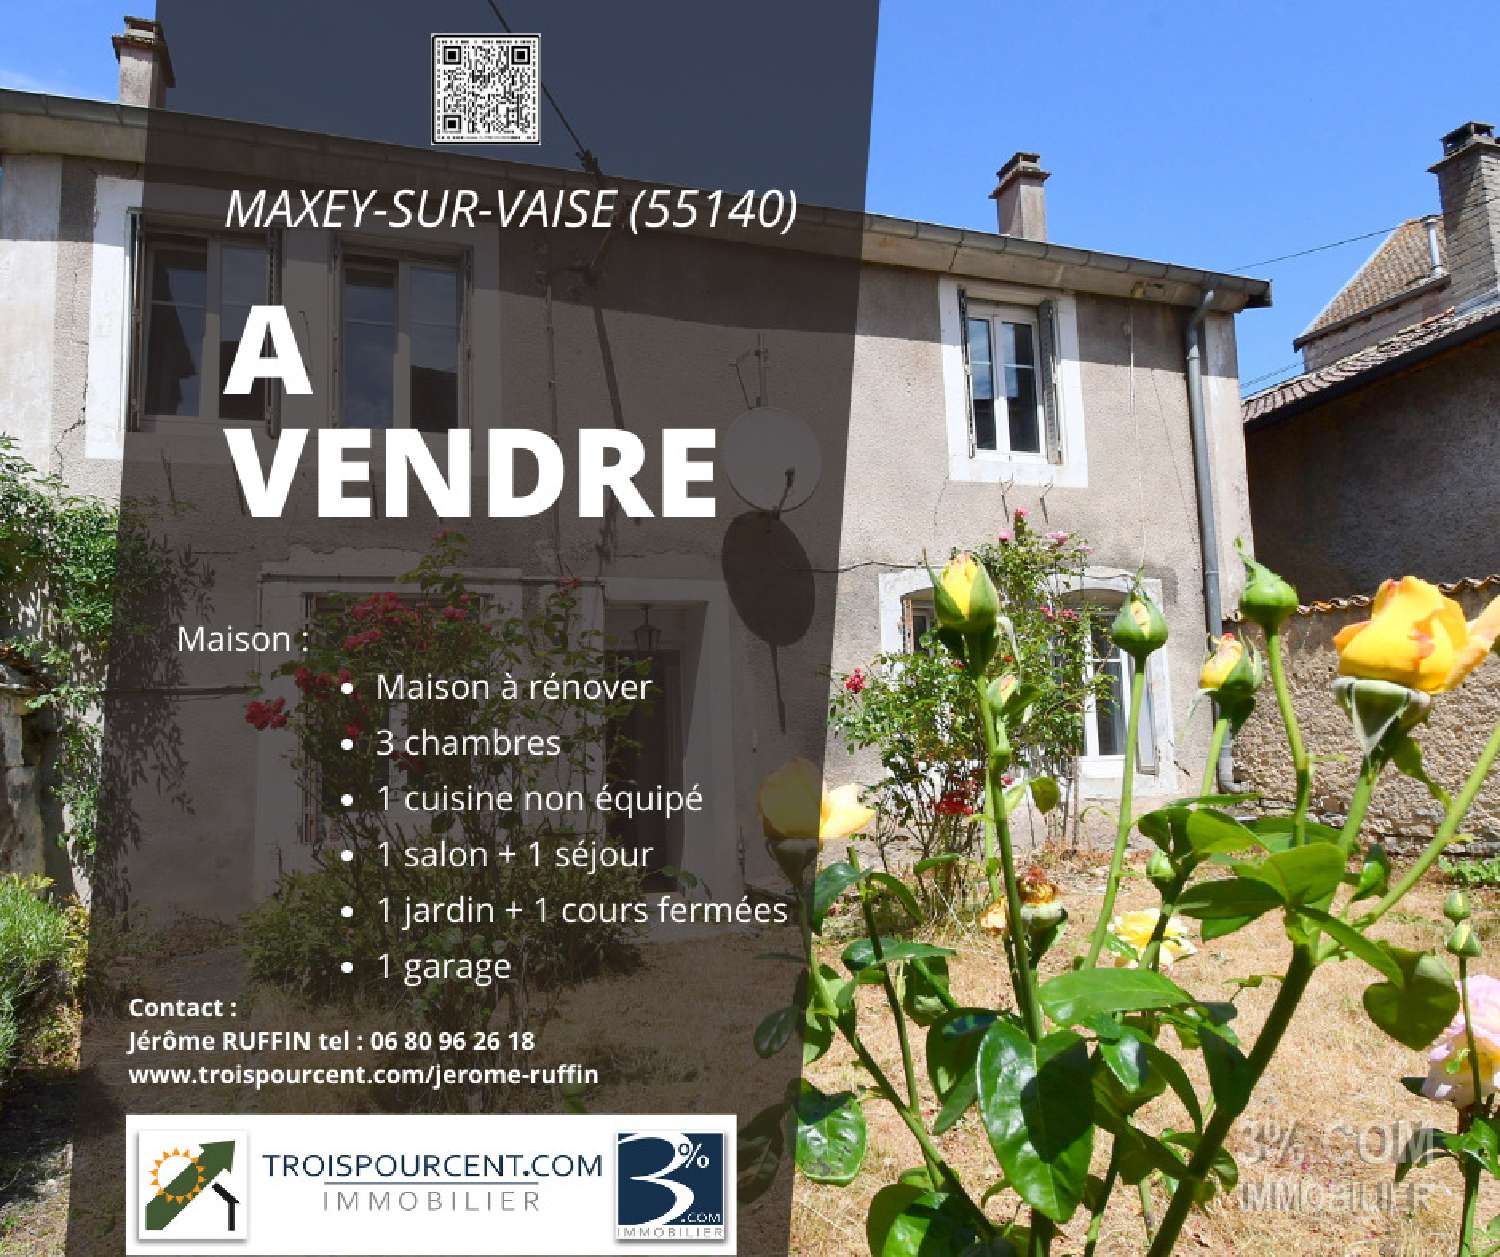  te koop dorpshuis Maxey-sur-Vaise Meuse 1